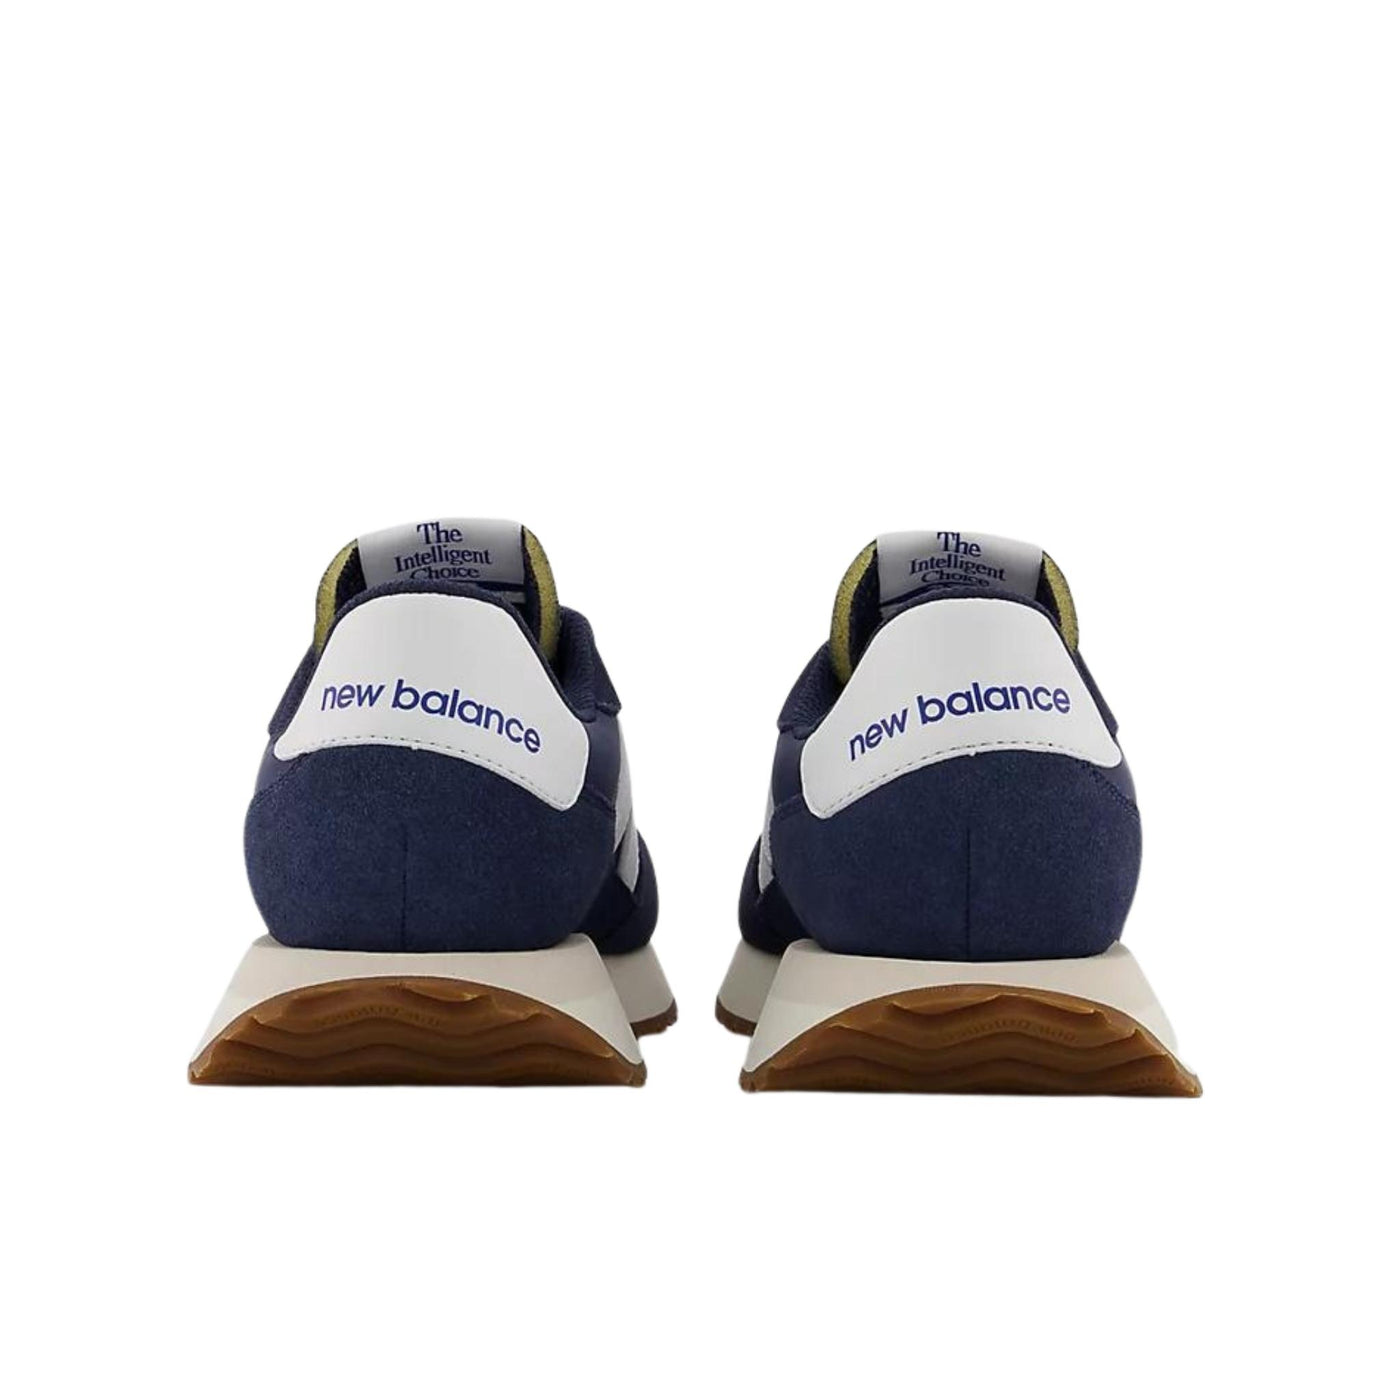 sneakers bambino new balance blu tomaia destrutturata retro